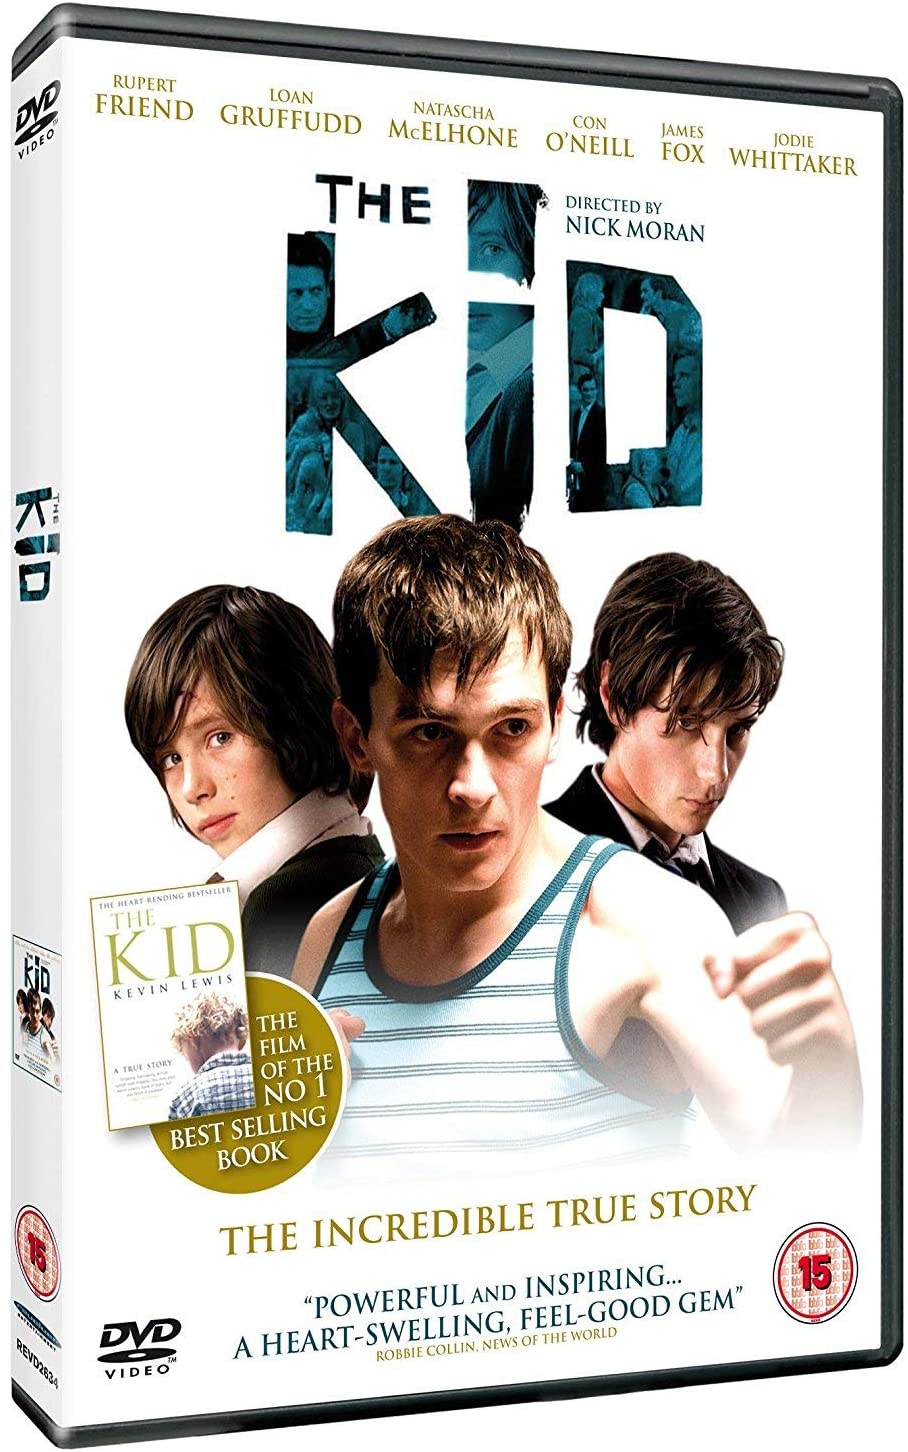 The Kid [2010] – Drama [DVD]